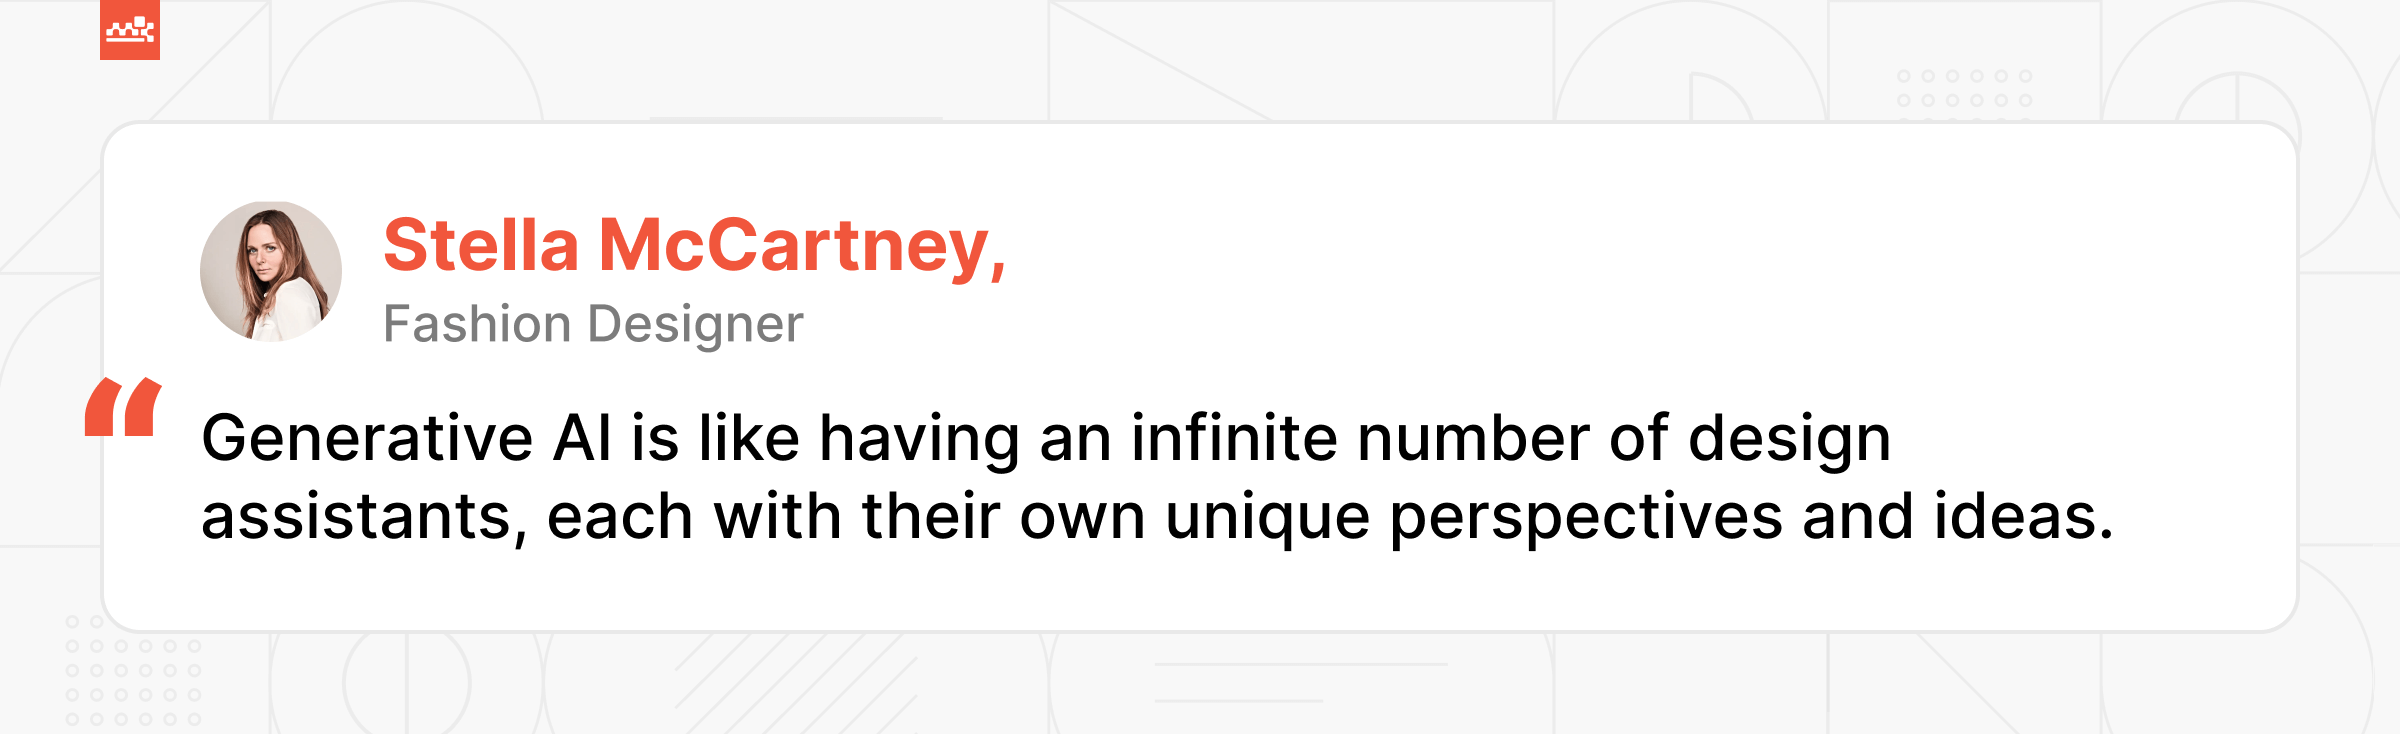 McCartney Quote on Gen AI